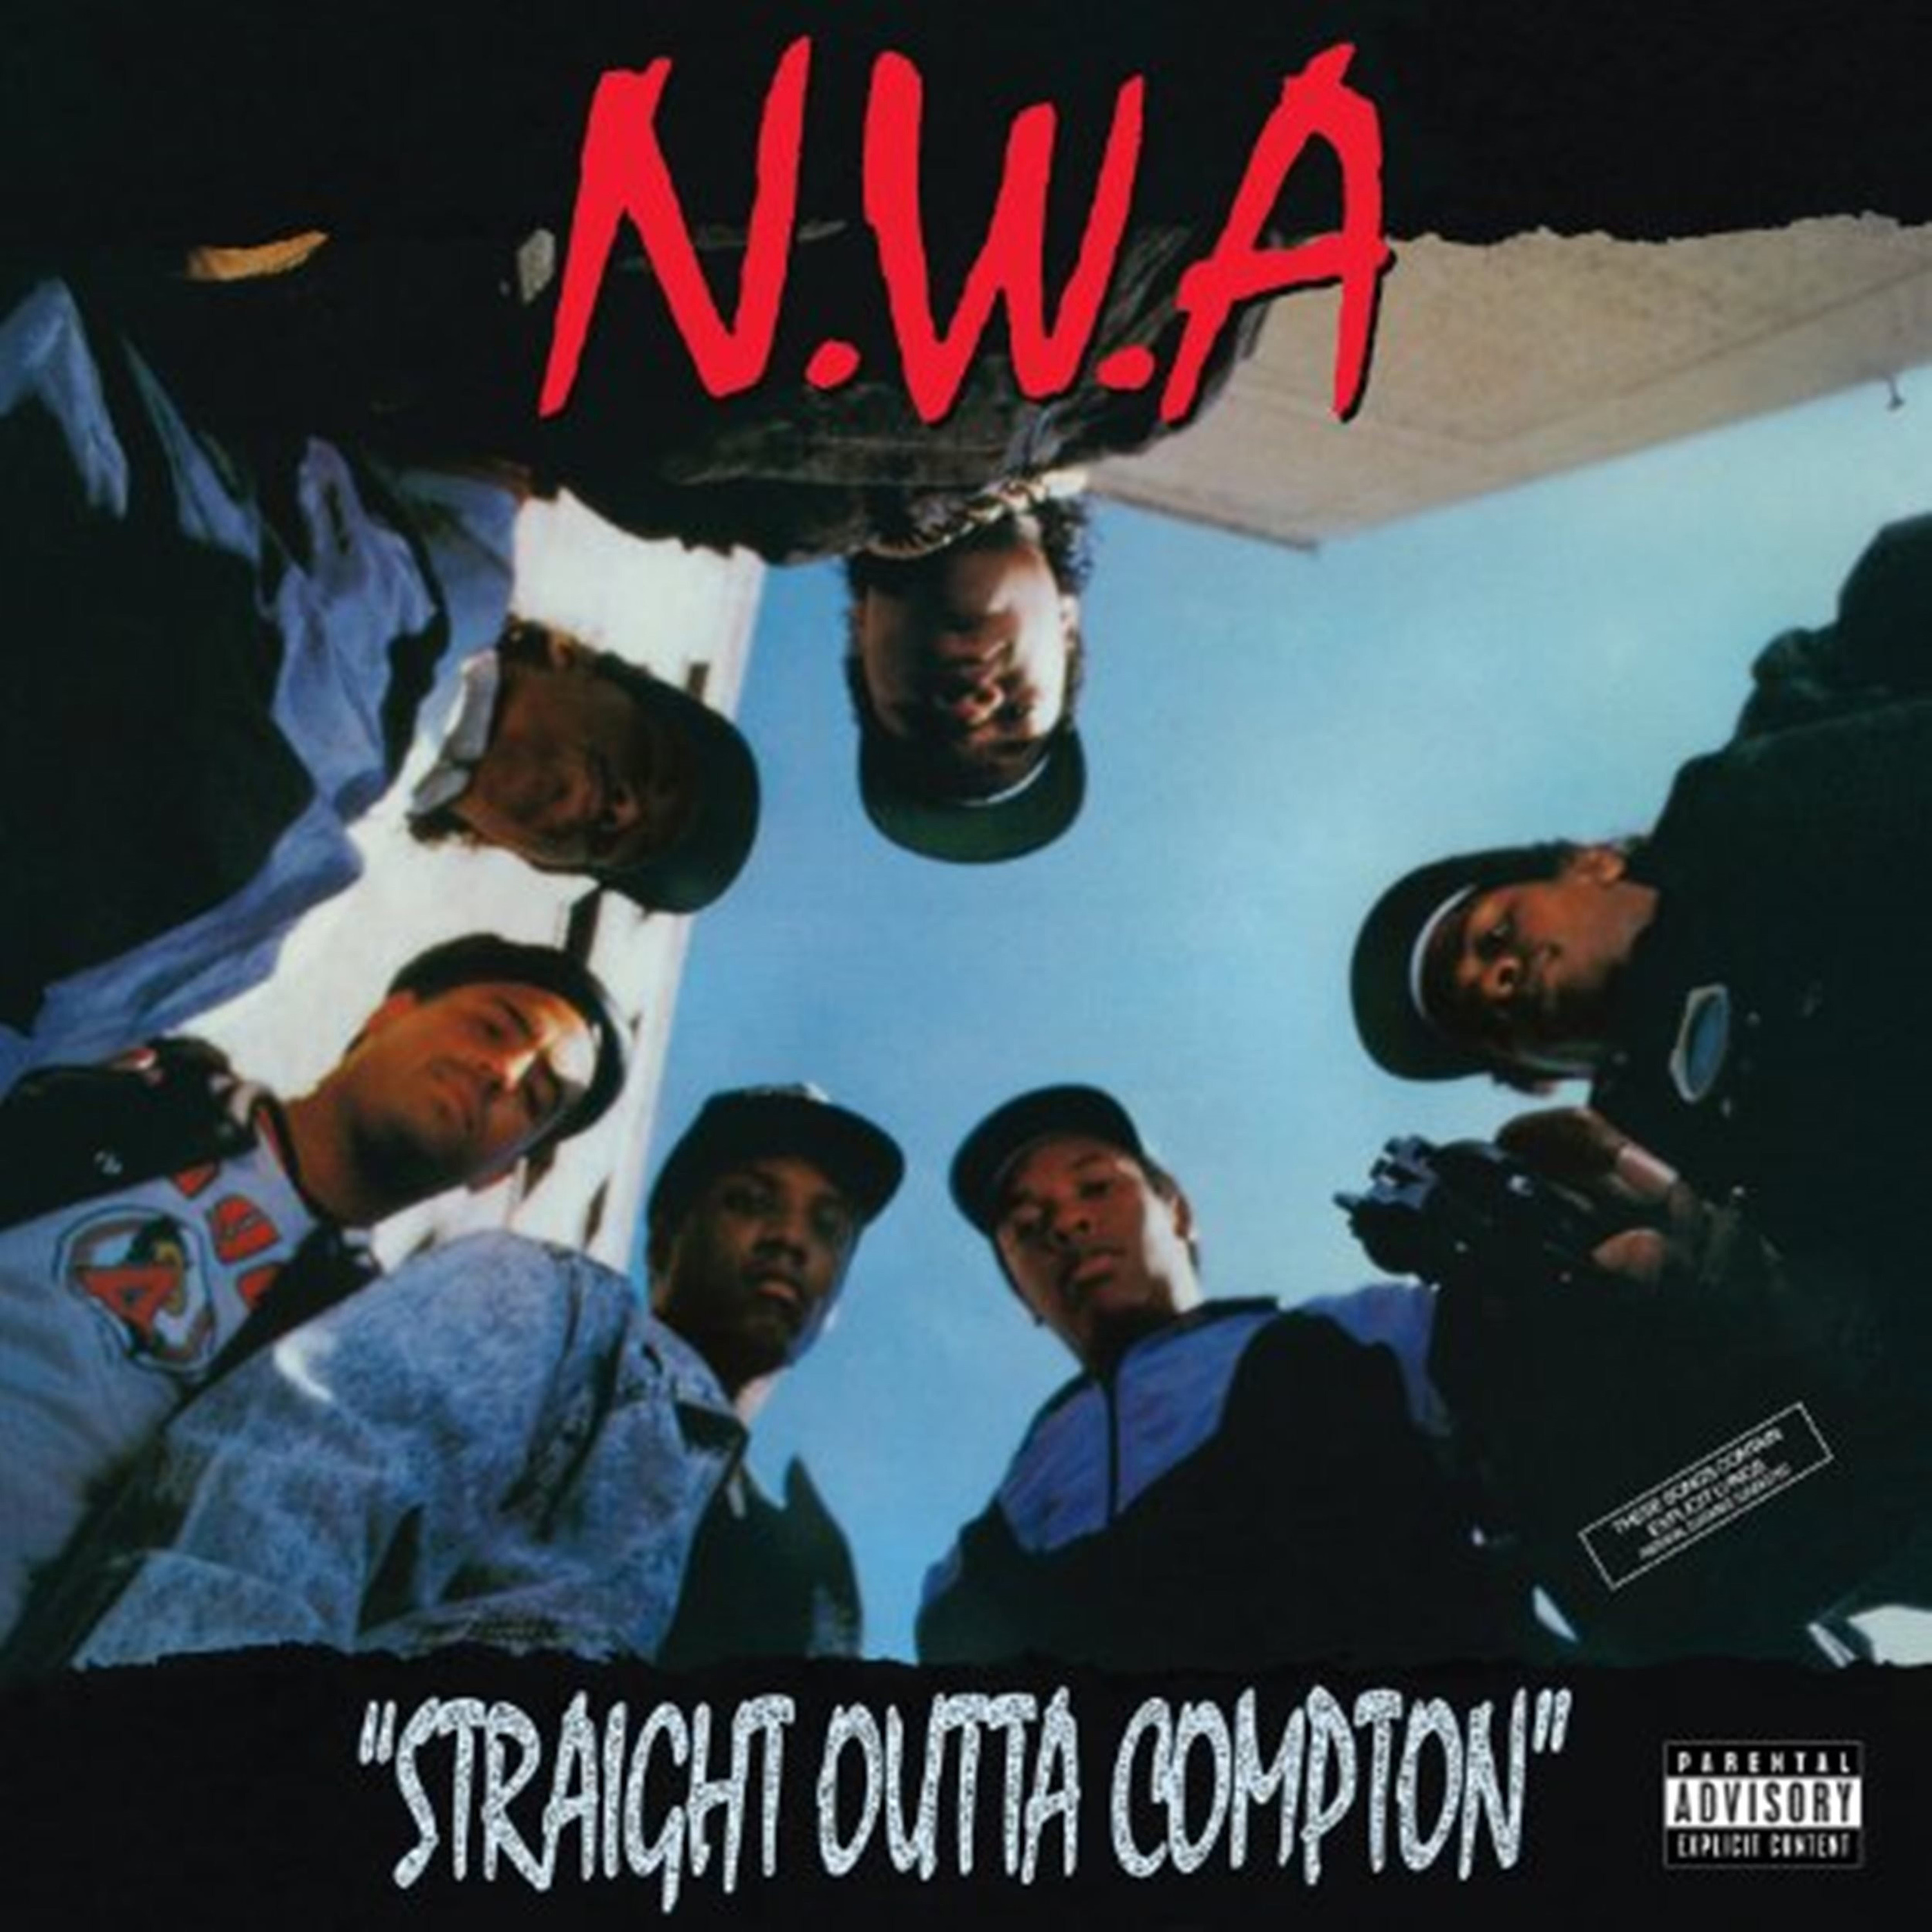 NWA "Straight Outta Compton" album cover. (Courtesy Aftermath/Interscope)